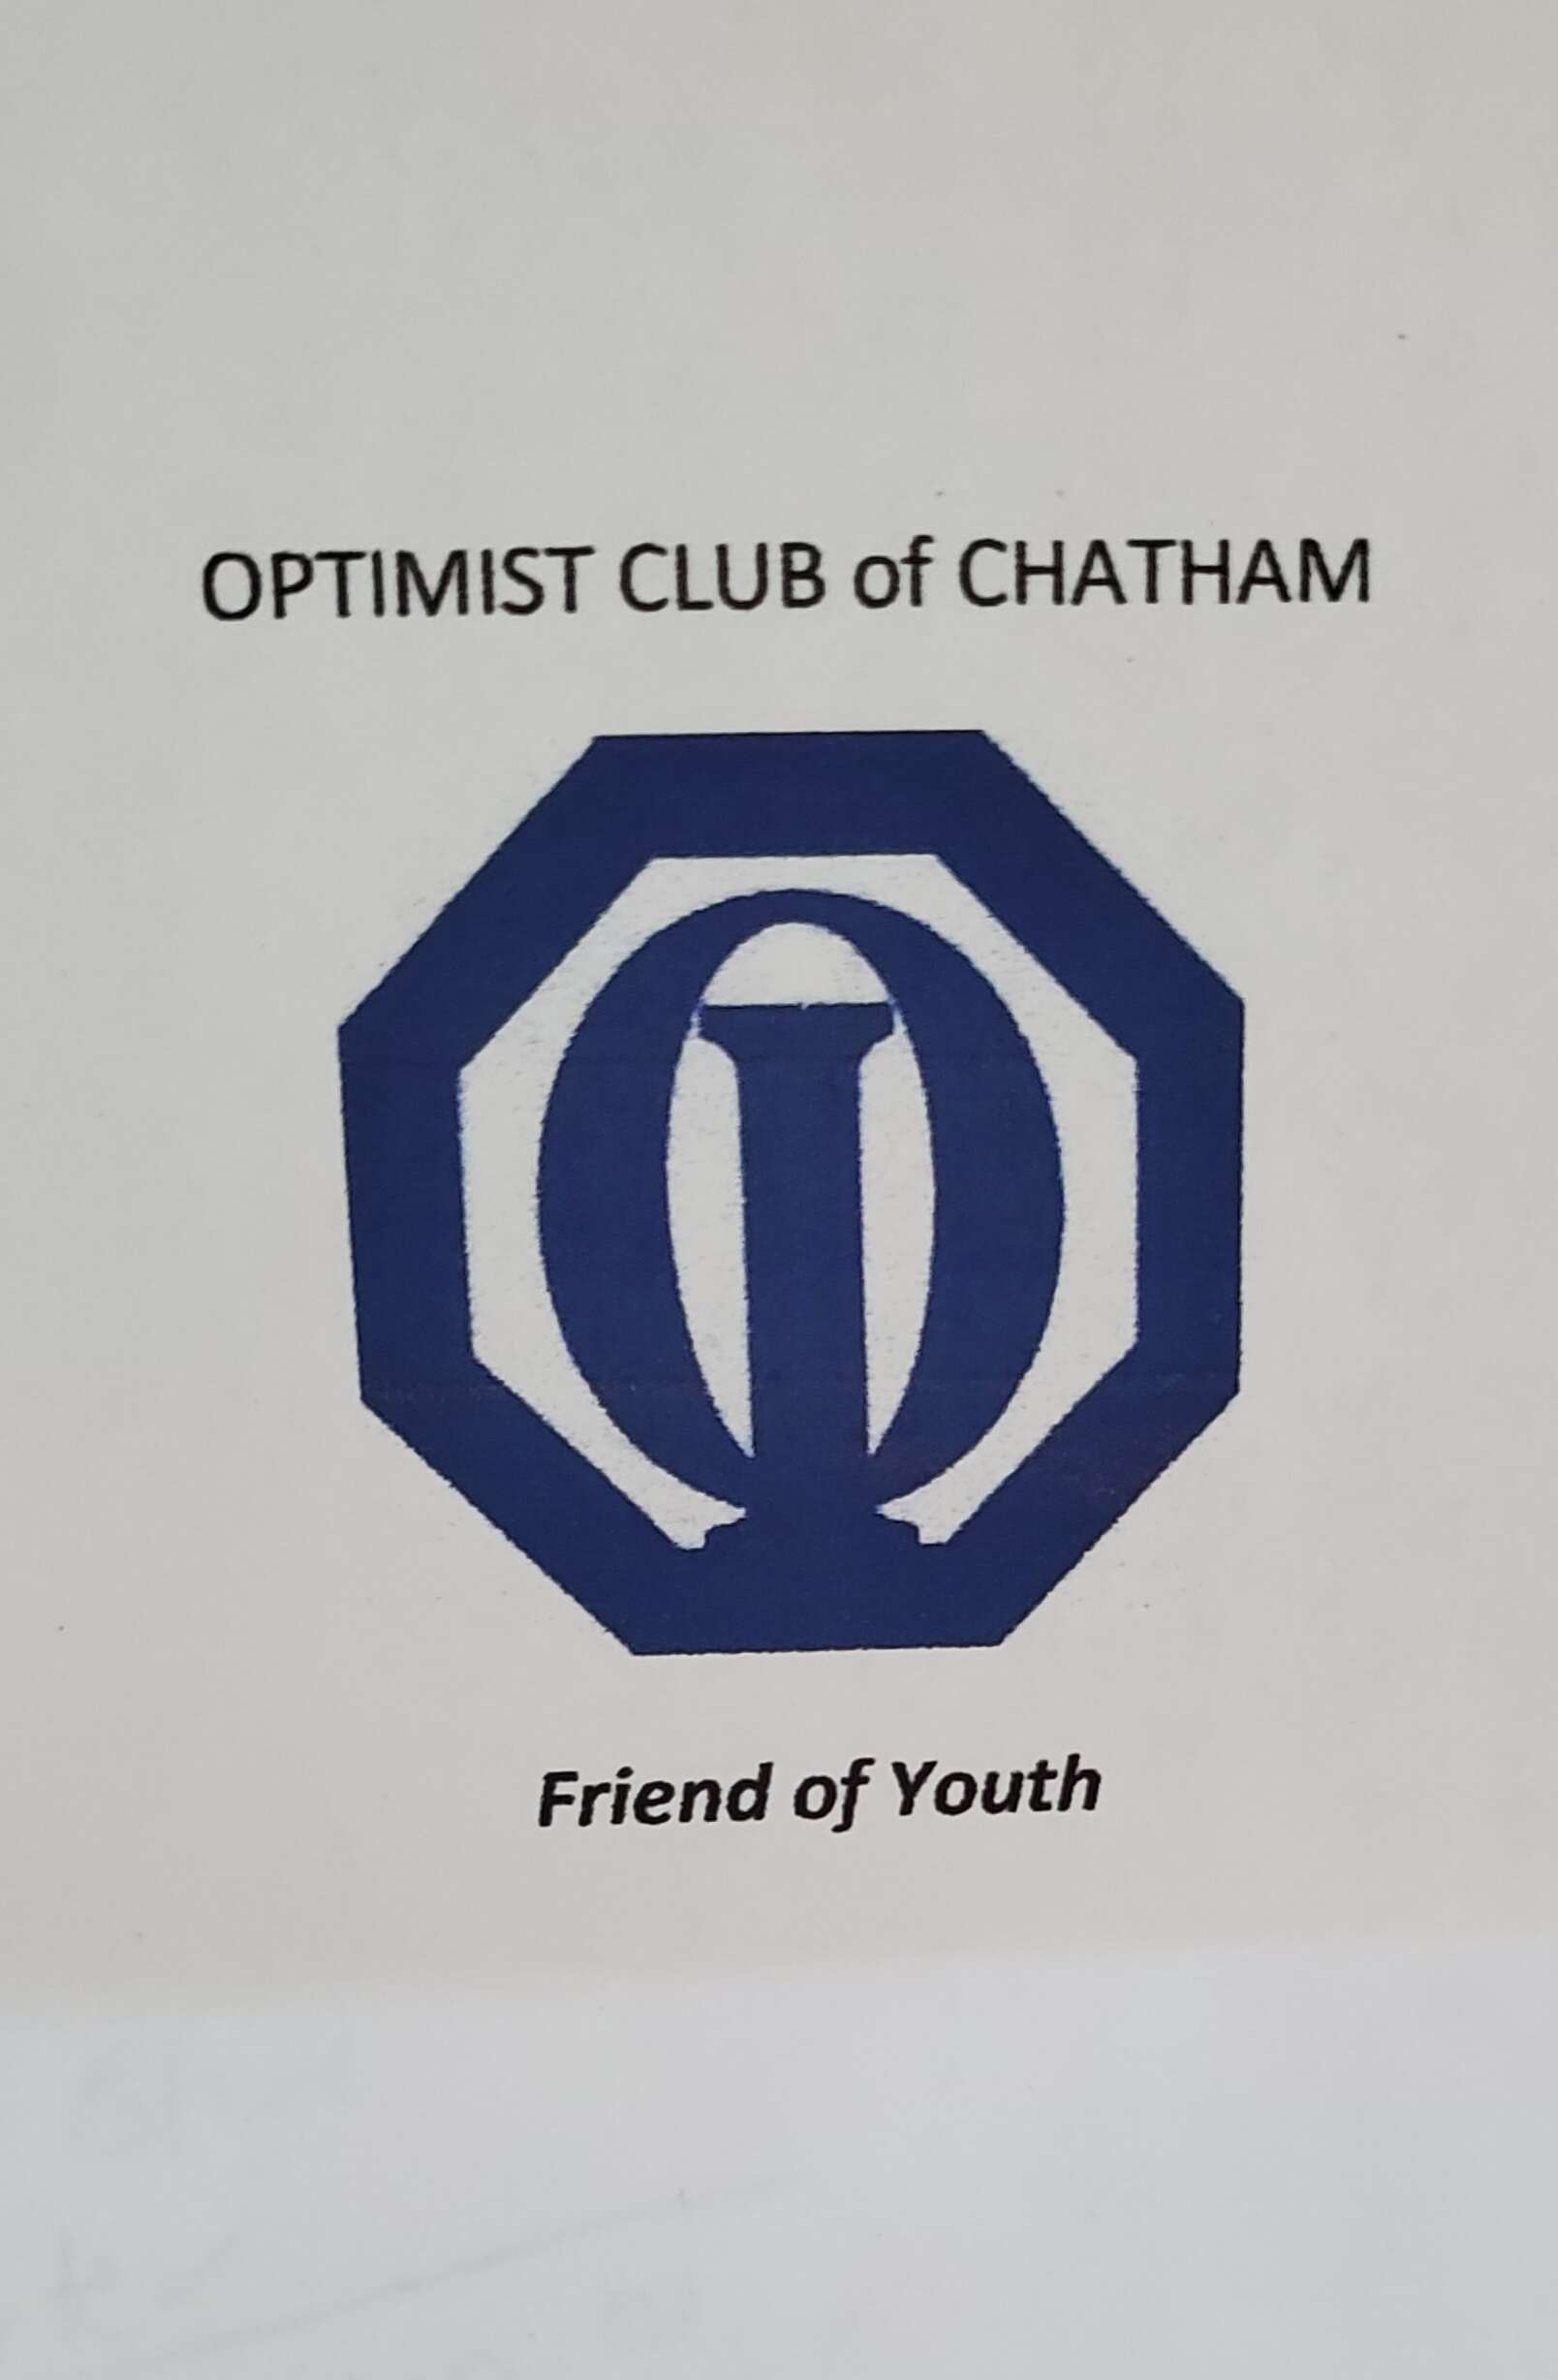 The Optimist Club of Chatham